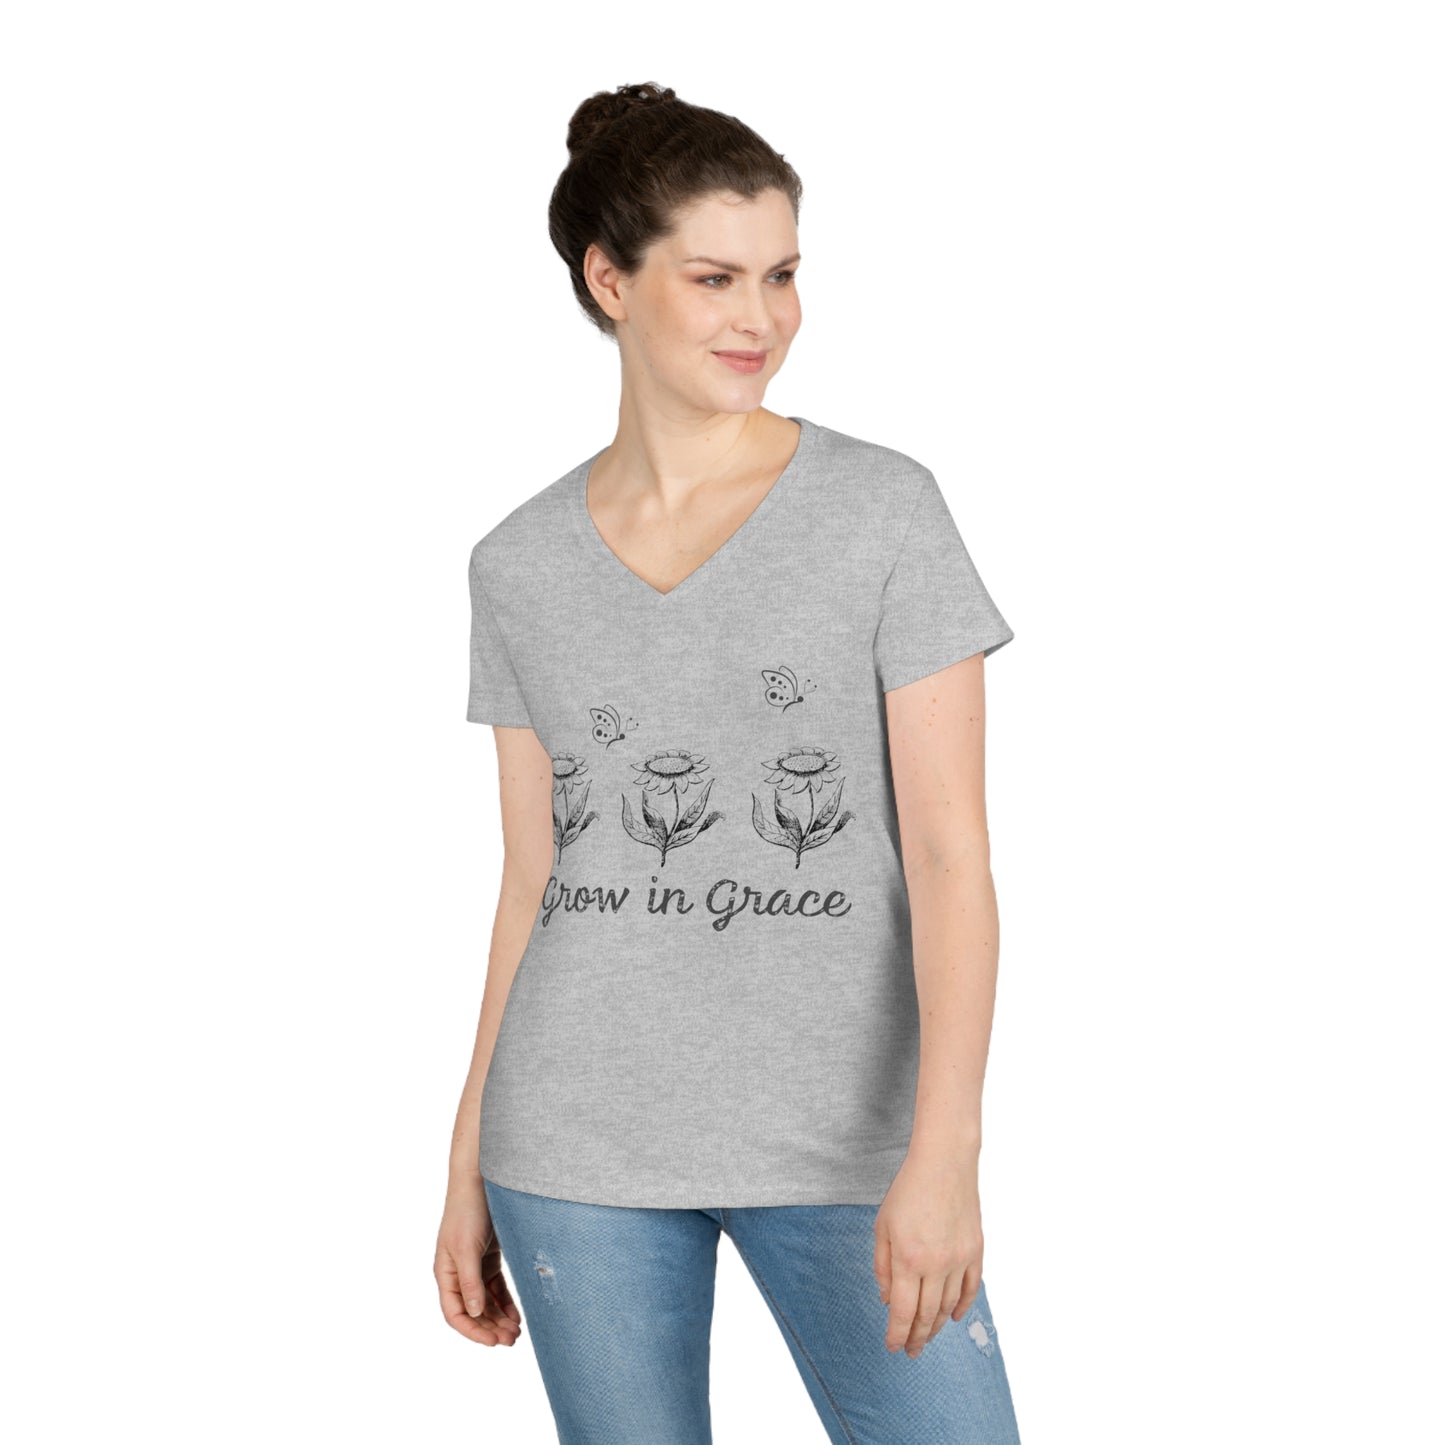 Ladies' V-Neck T-Shirt, Grow With Grace Shirt, Bible Verse Shirt